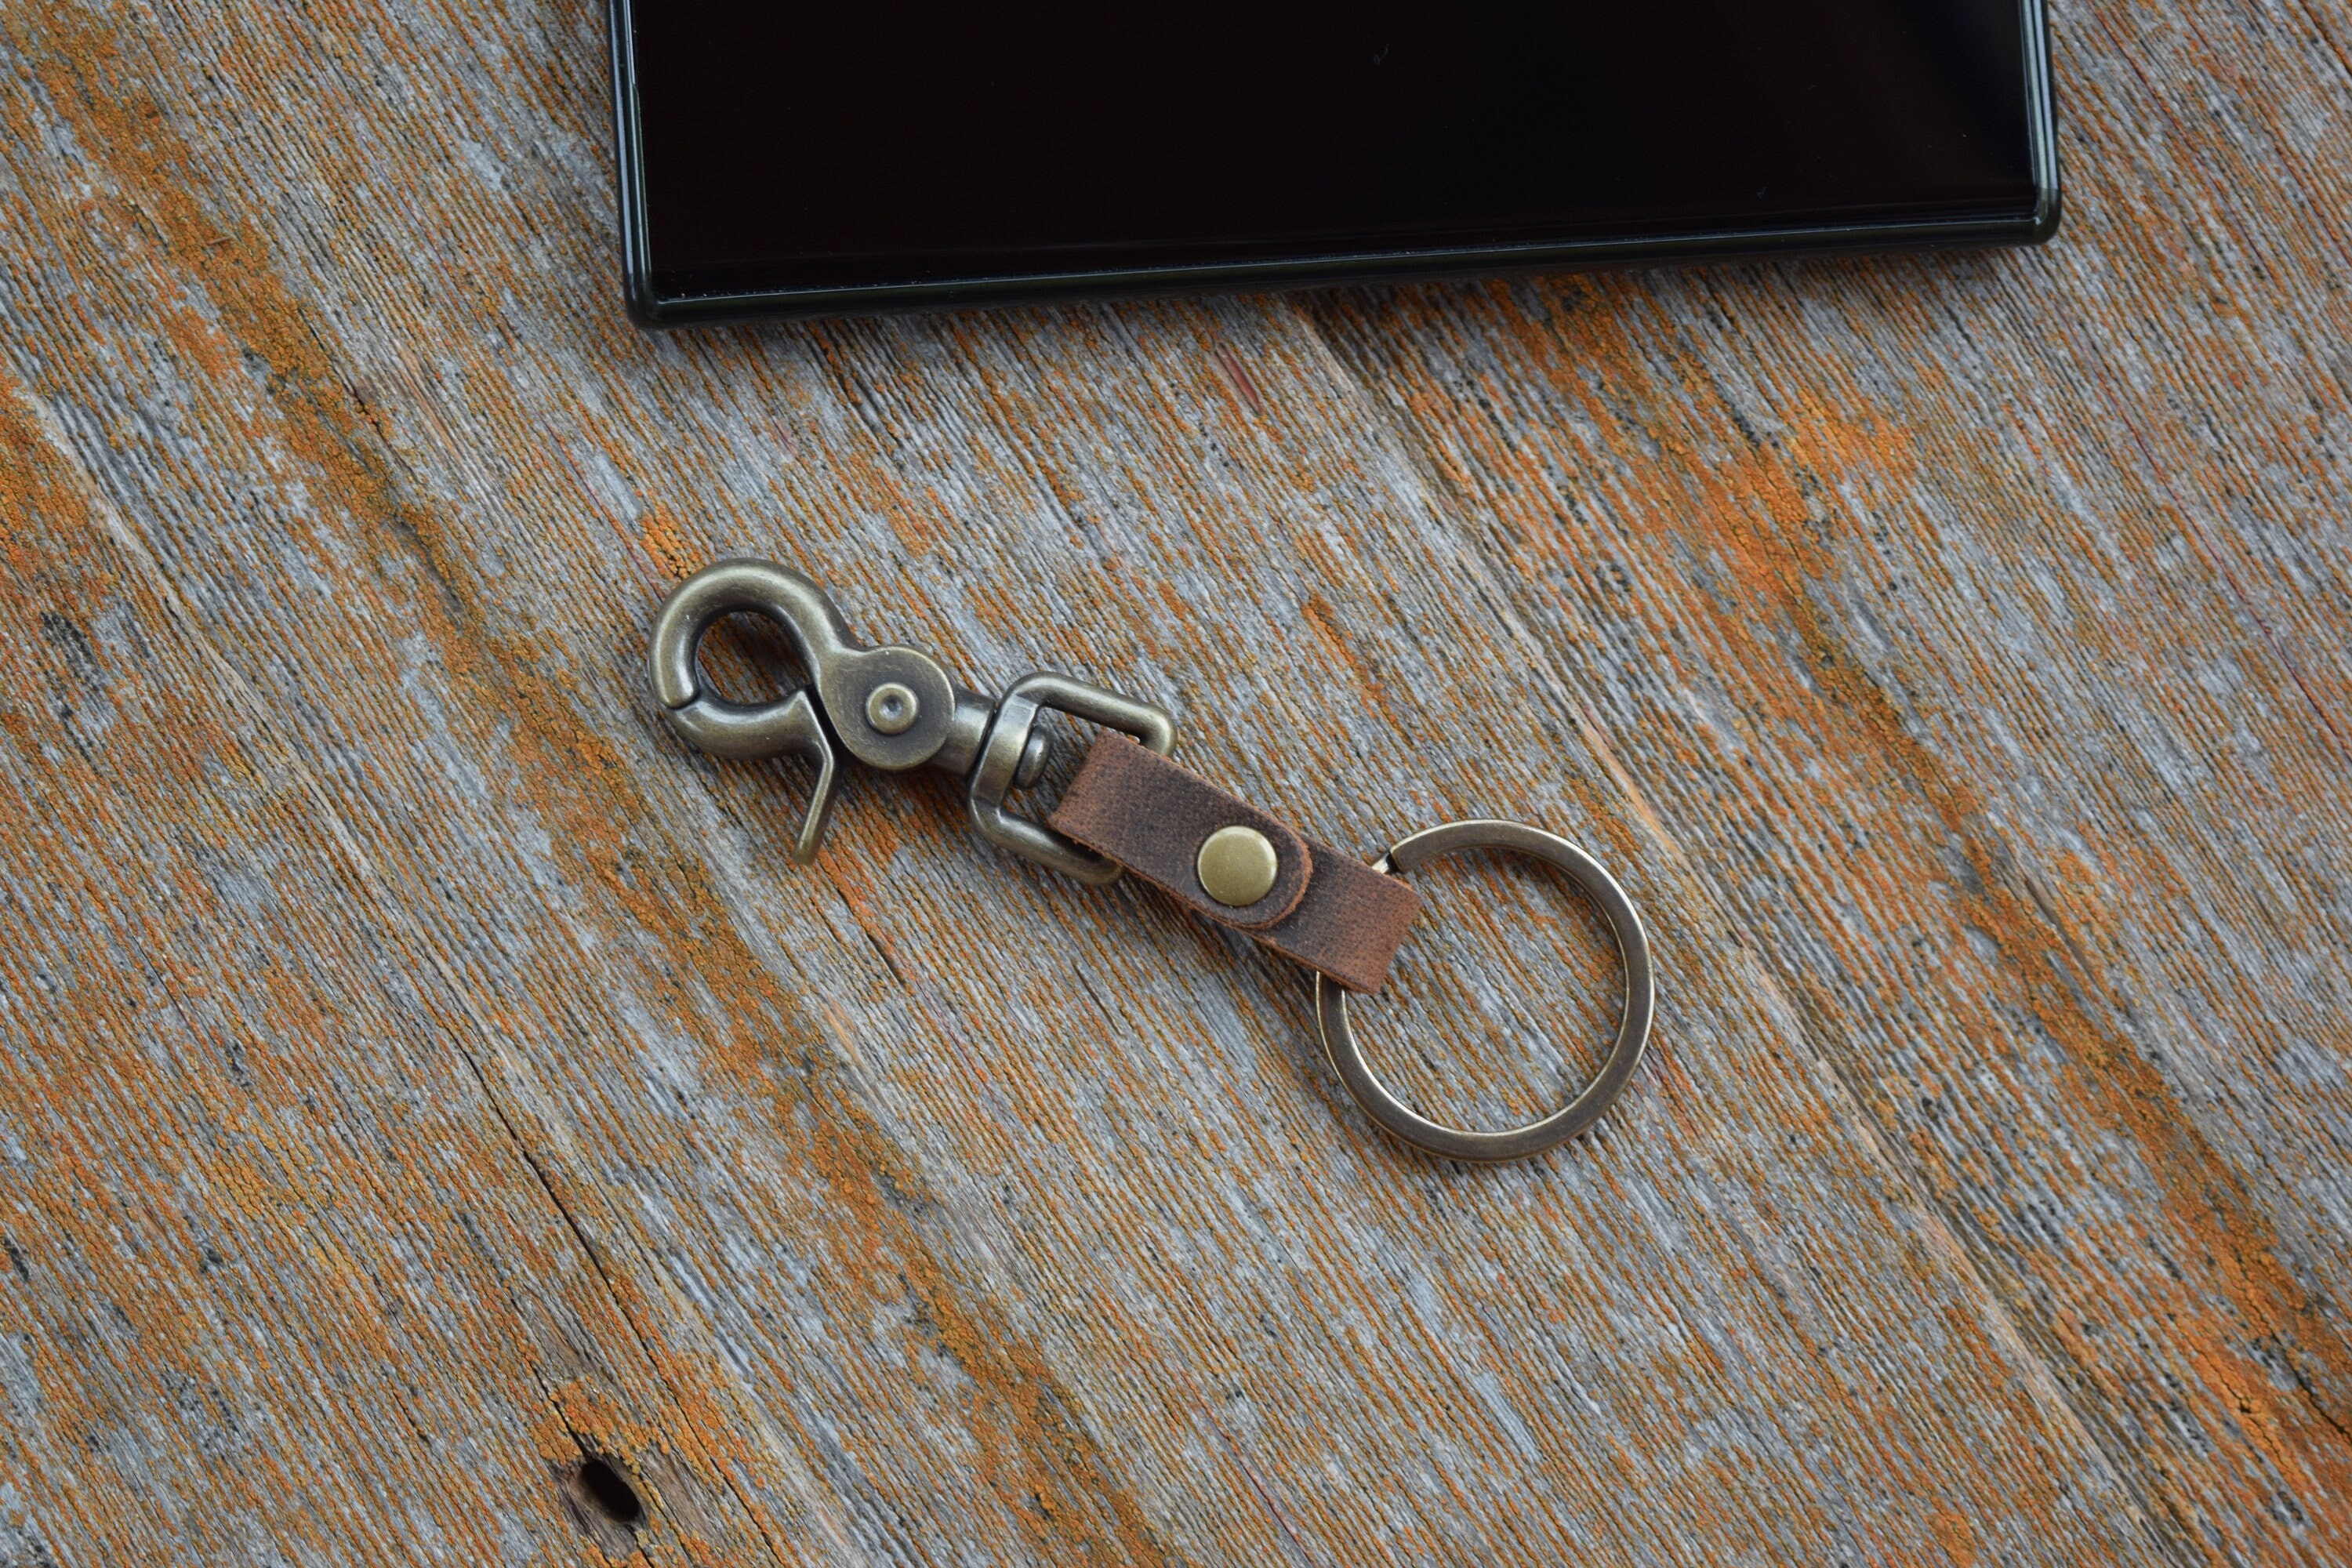 Full grain leather belt key holder / distressed leather belt hook